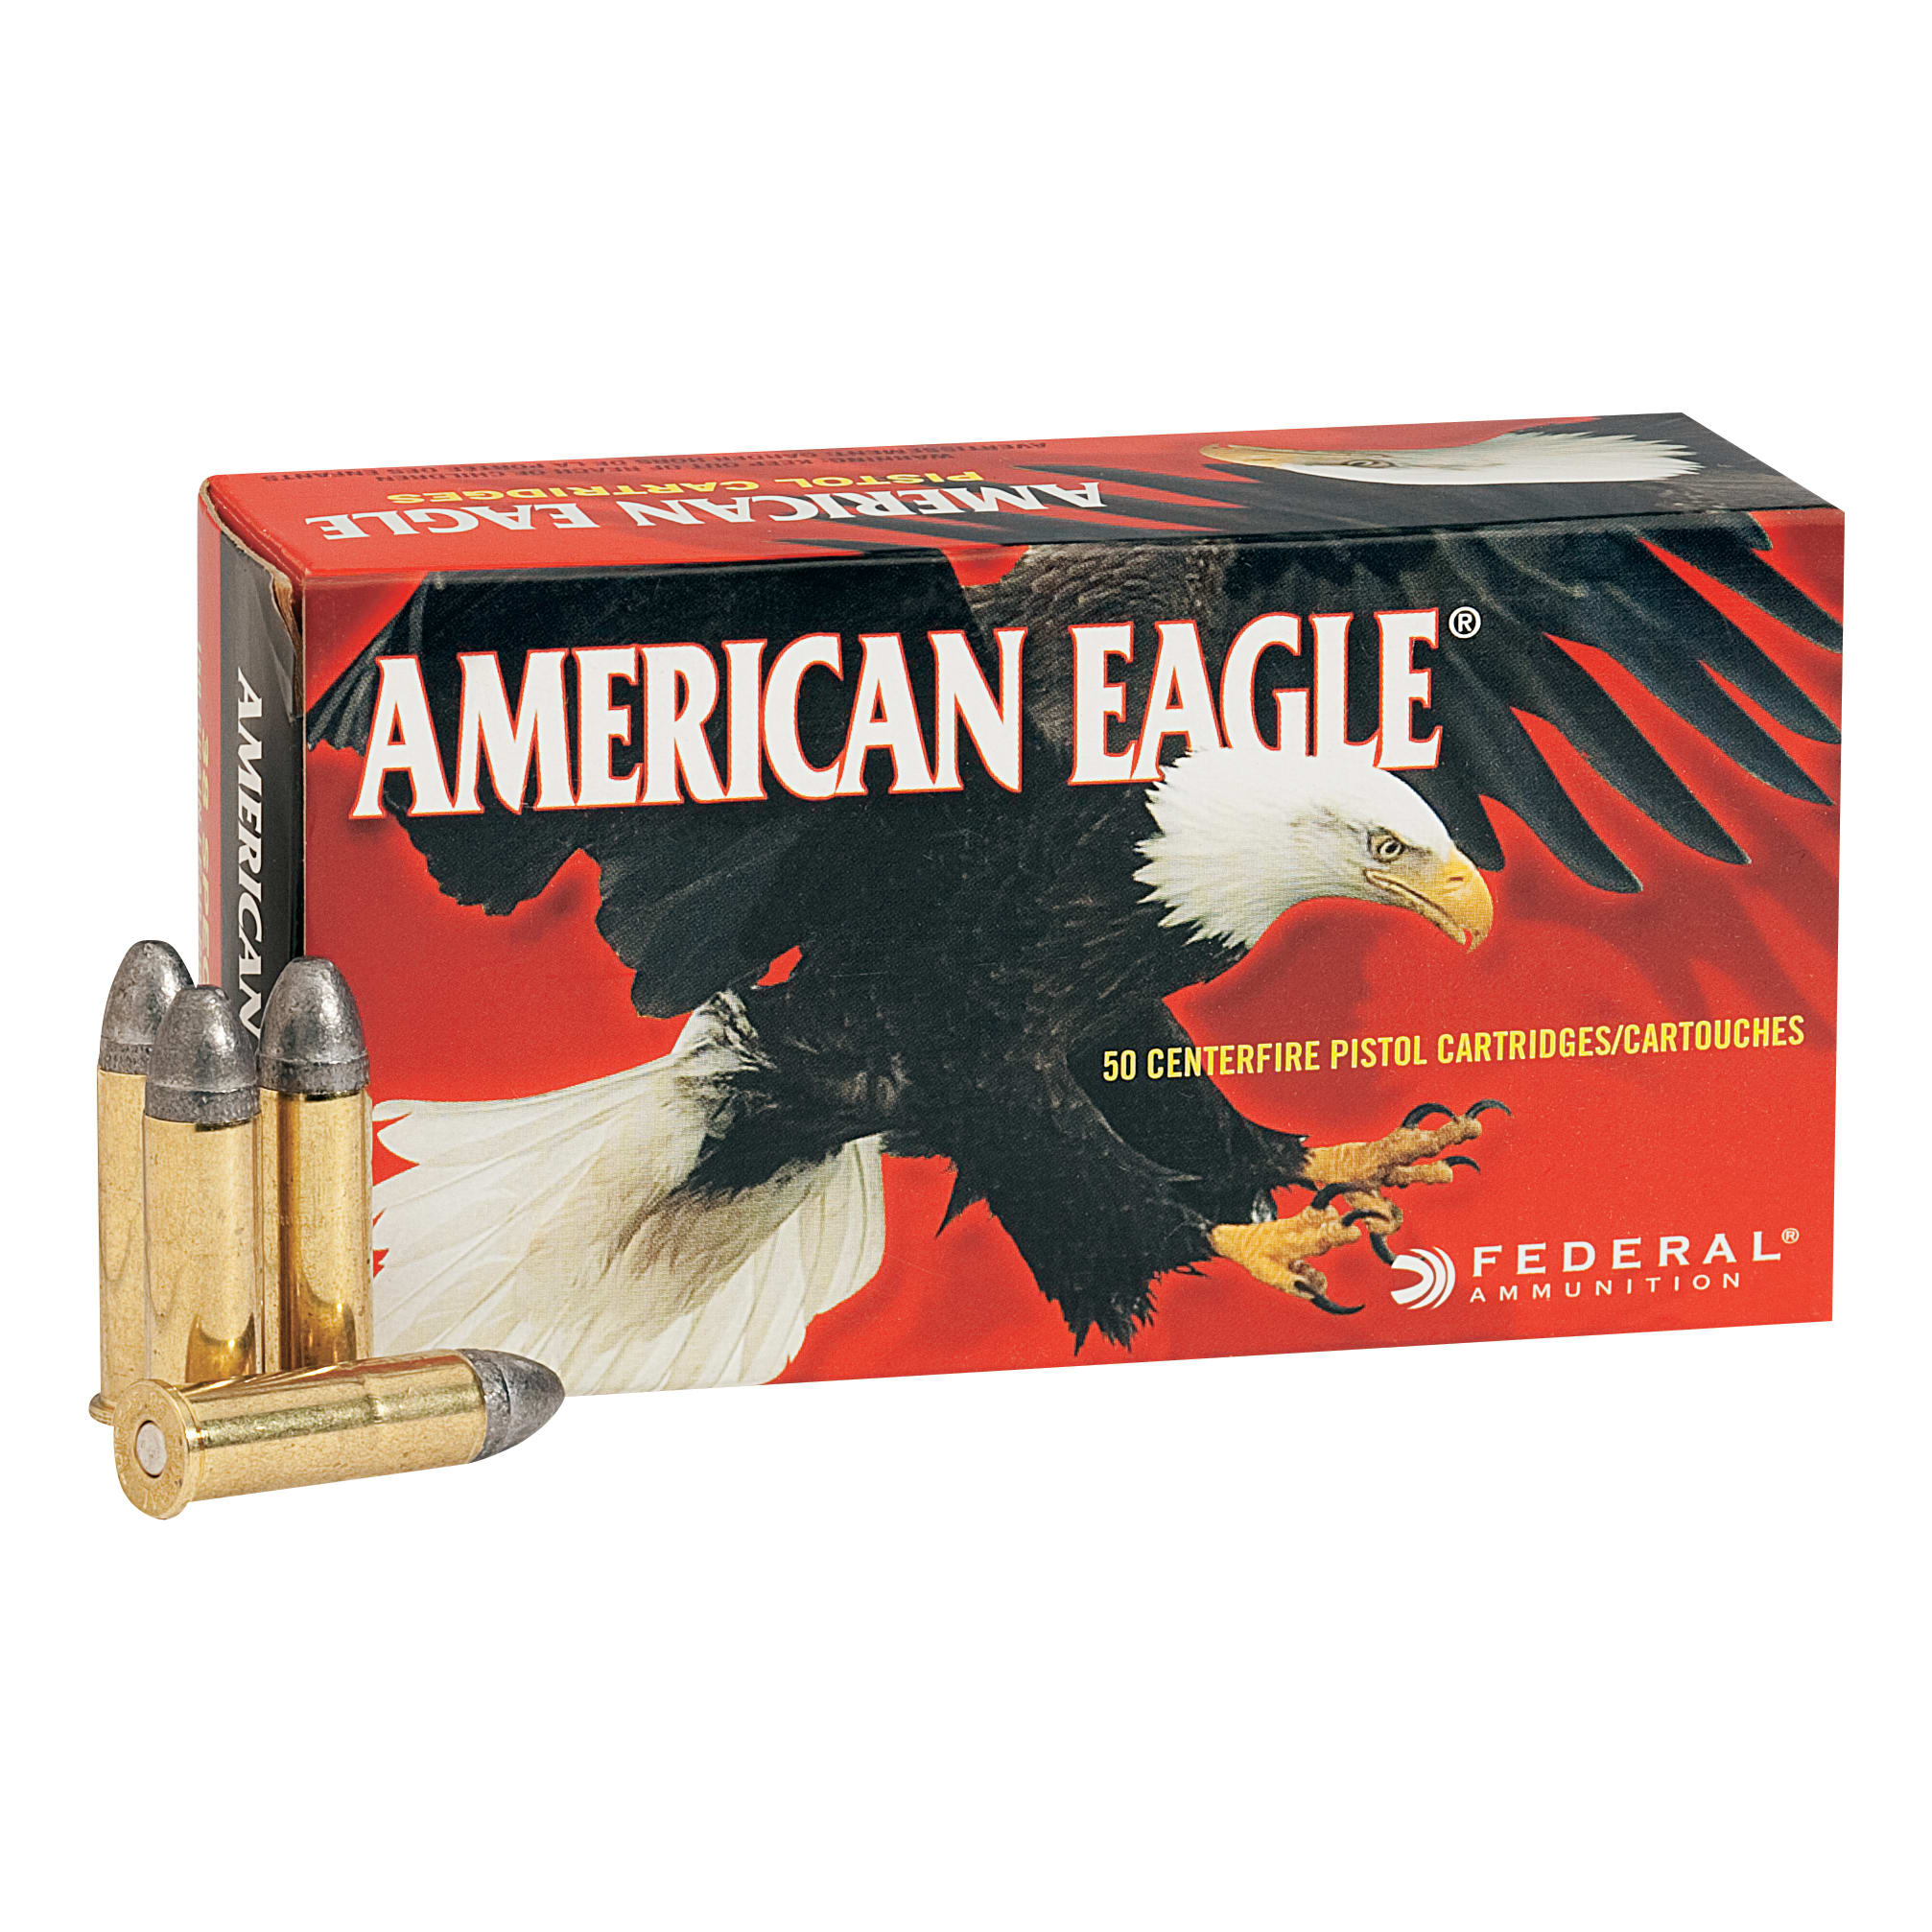 American Eagle Revolver Centerfire Ammunition